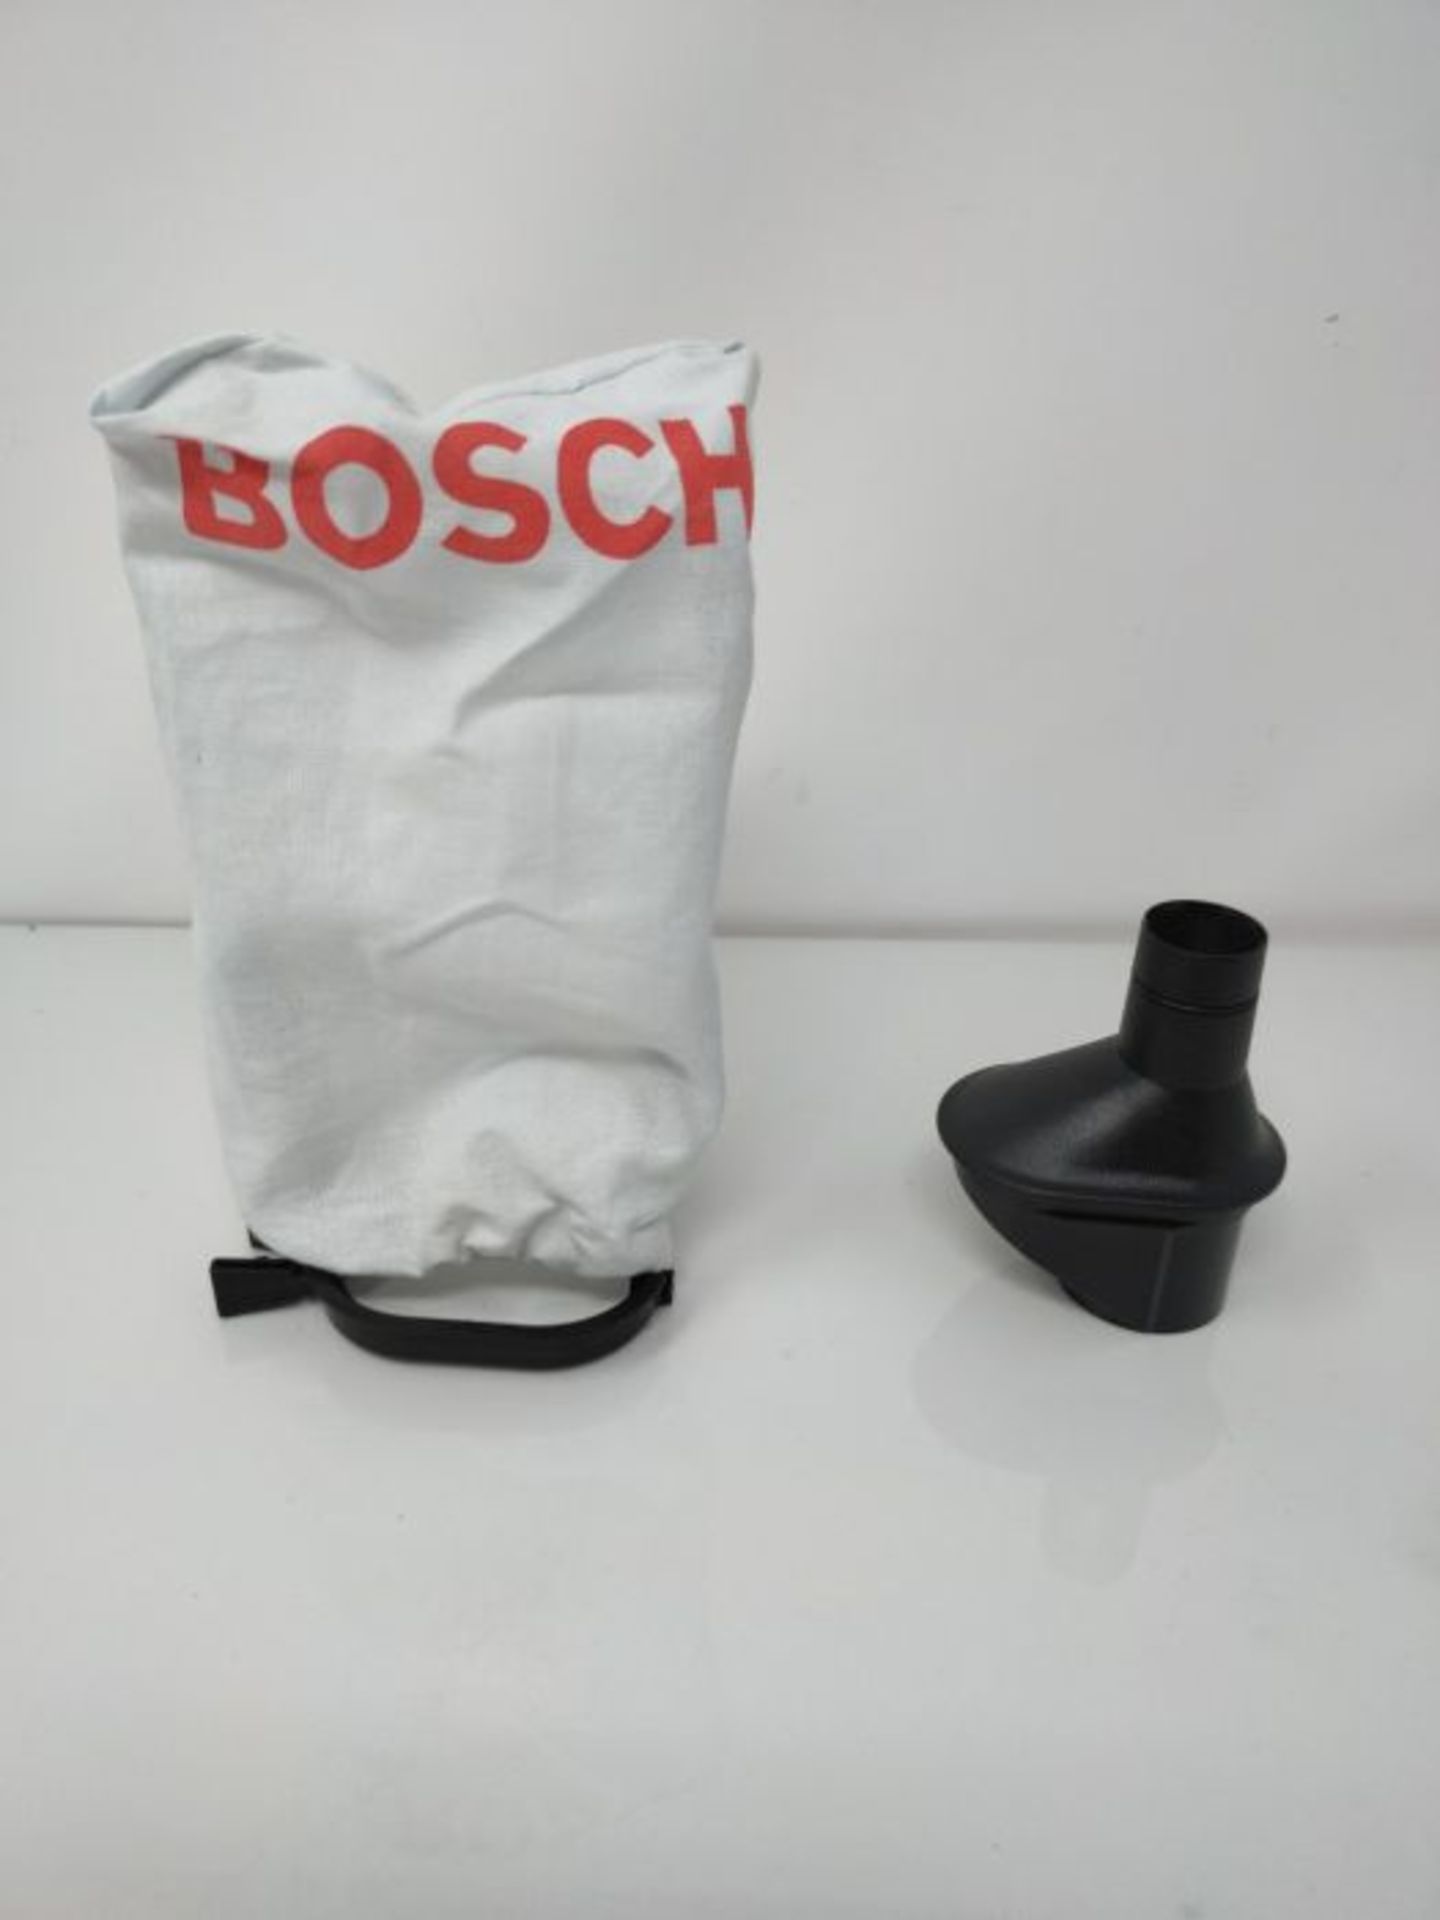 Bosch 1605411028 Dust Bag for Random Orbit, Grey - Image 3 of 3